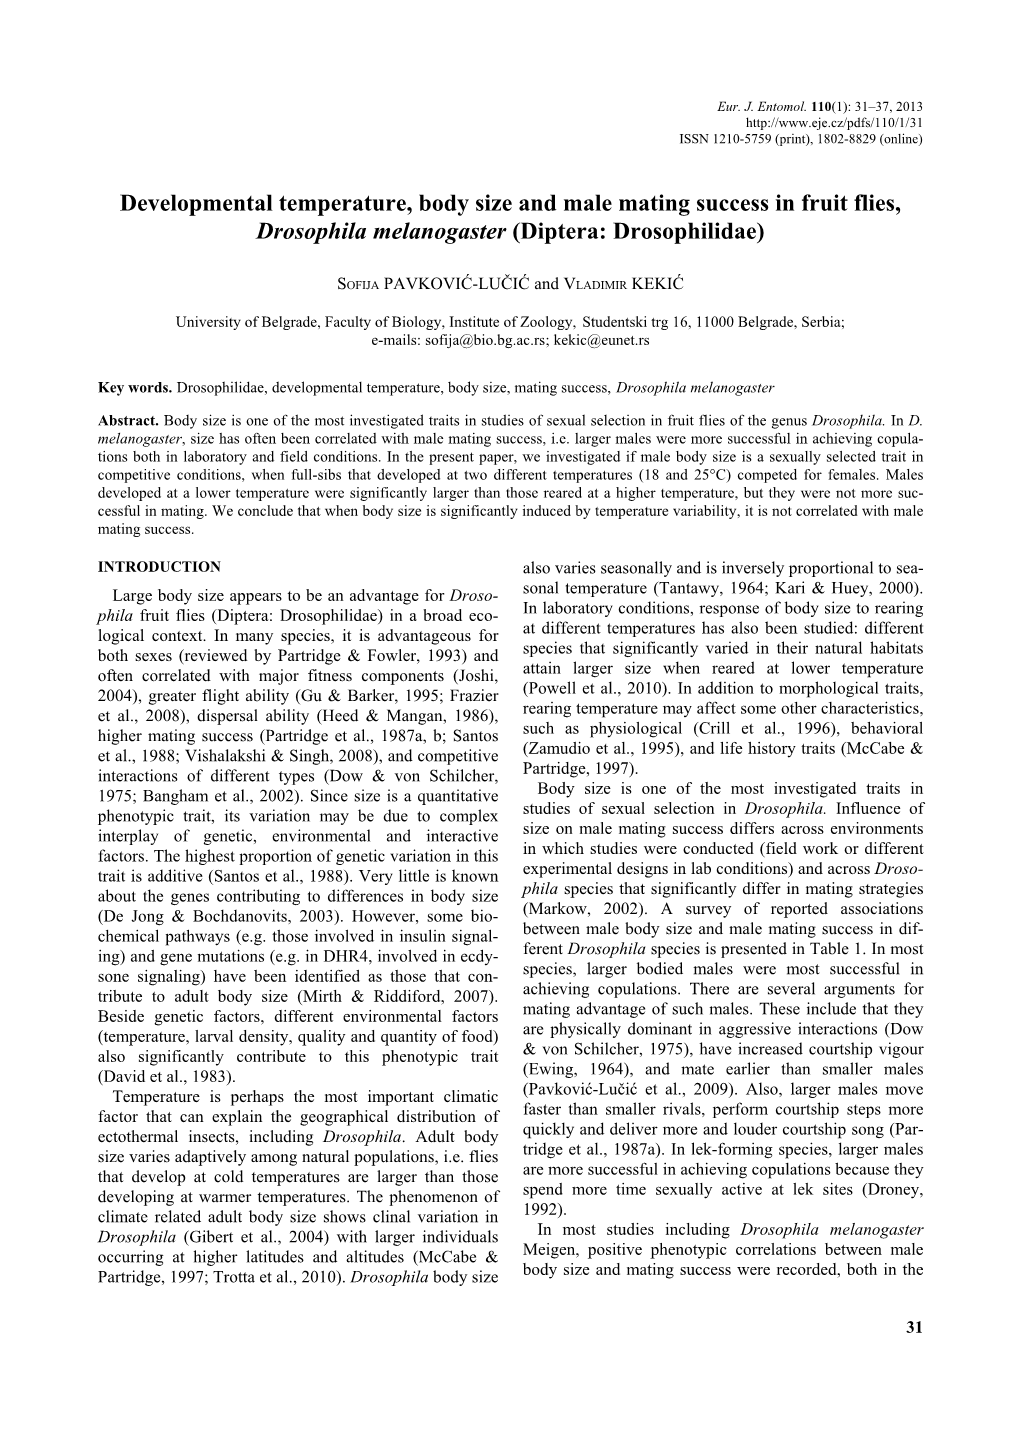 Developmental Temperature, Body Size and Male Mating Success in Fruit Flies, Drosophila Melanogaster (Diptera: Drosophilidae)